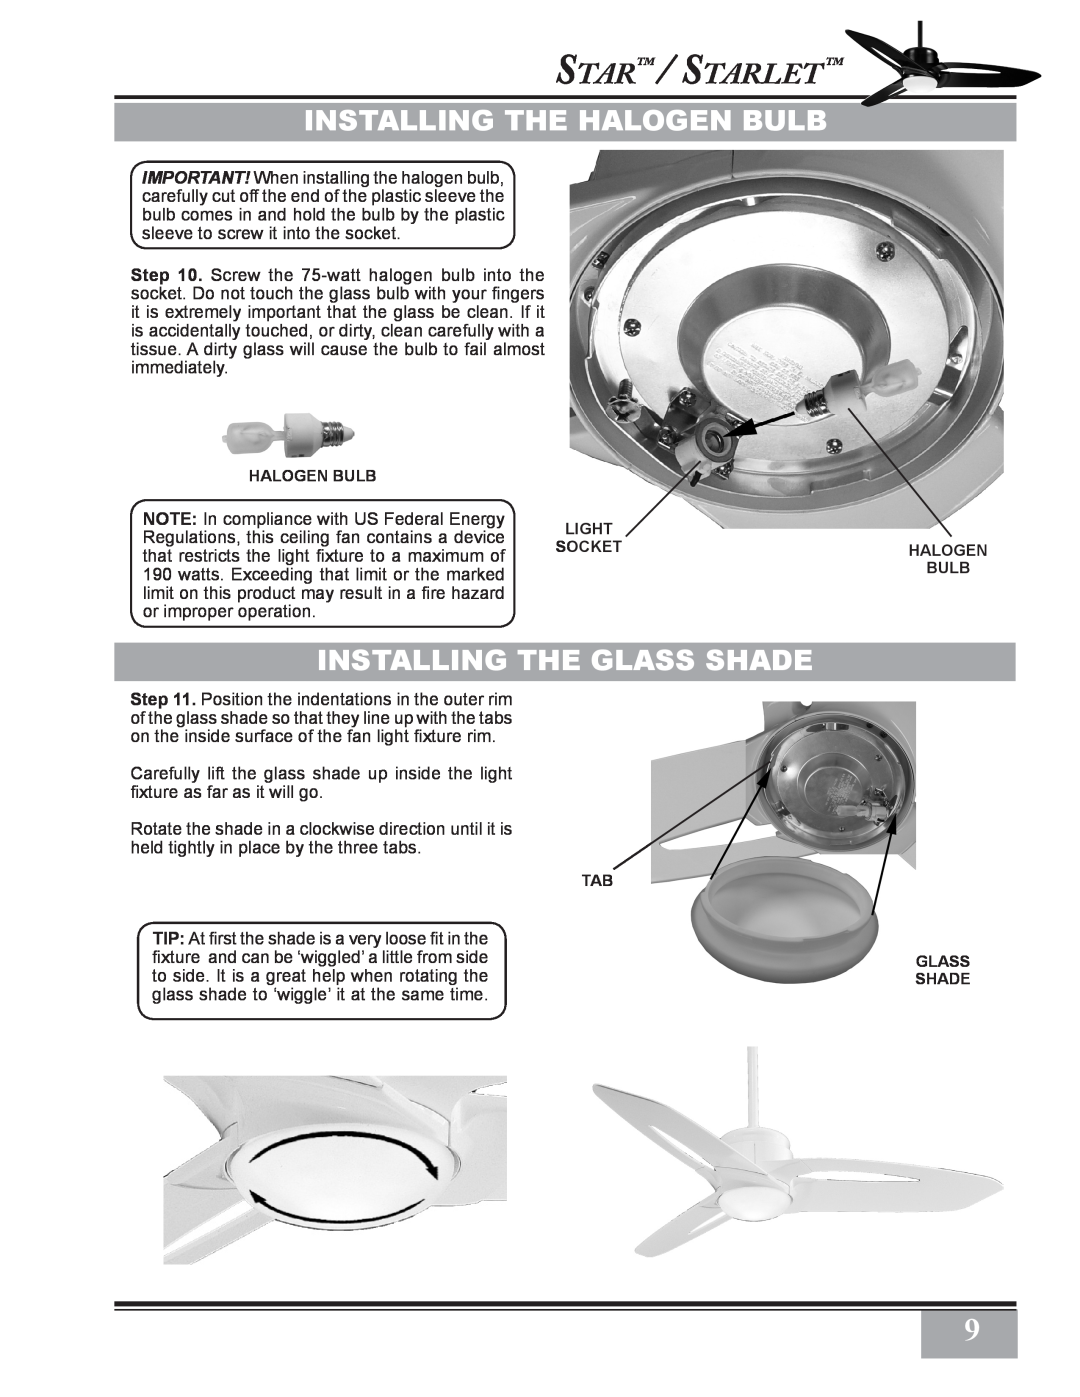 Casablanca Fan Company C28GXXM warranty Installing The Halogen Bulb, Installing The Glass Shade, Star / Starlet 